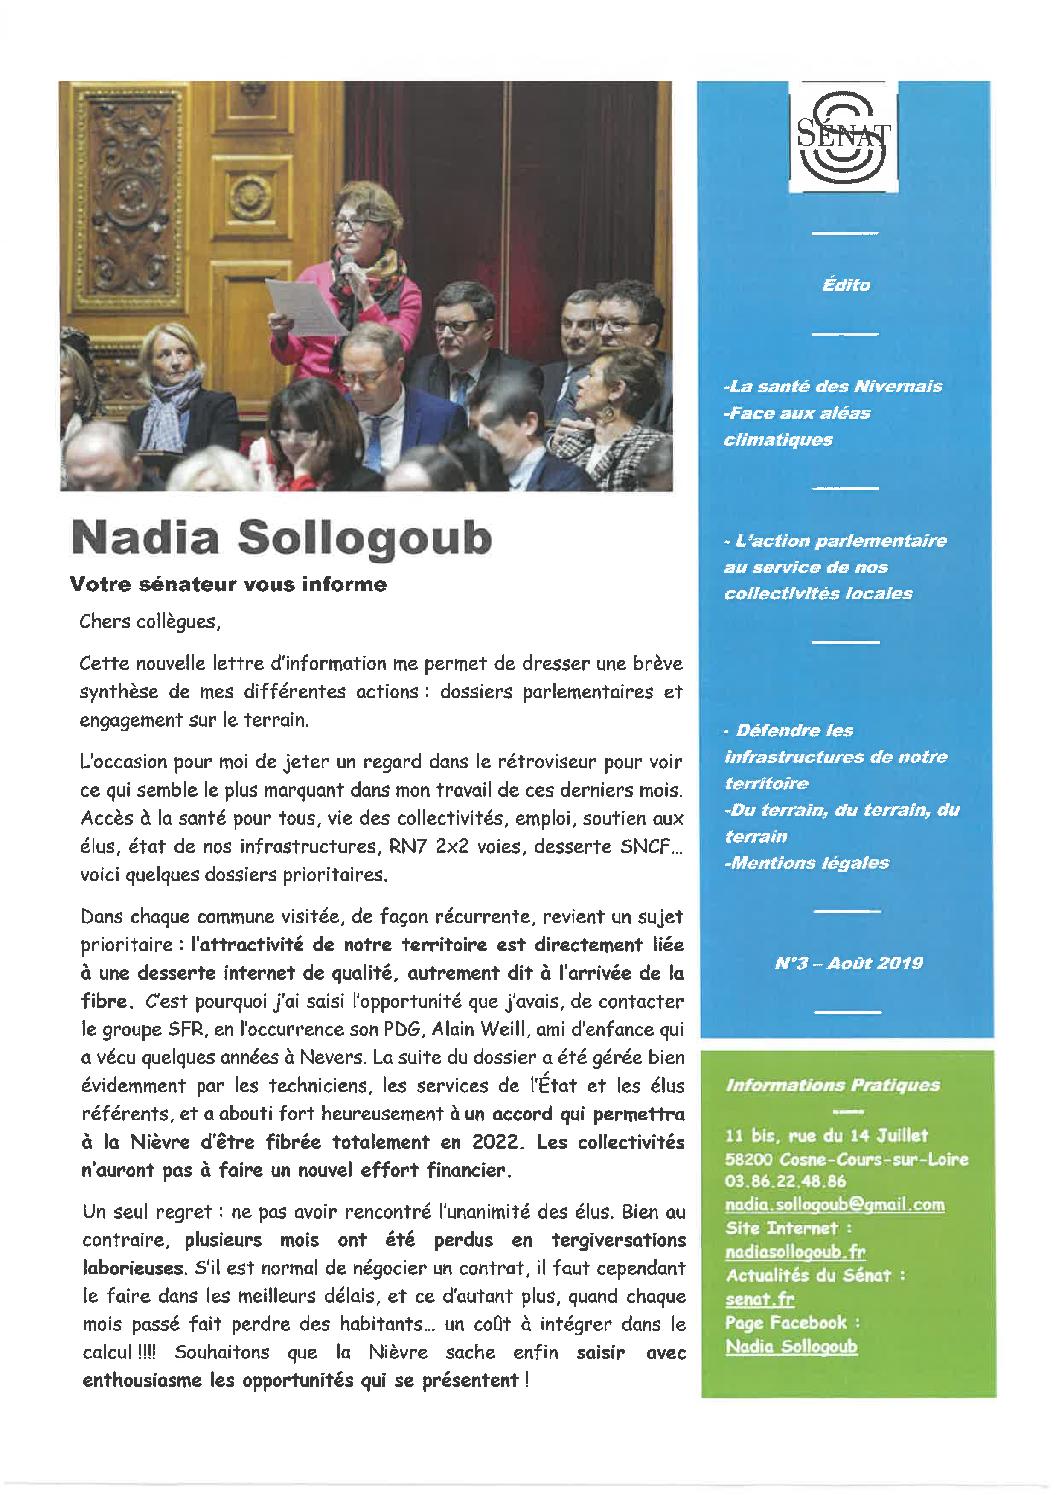 Nadia Sollogoub